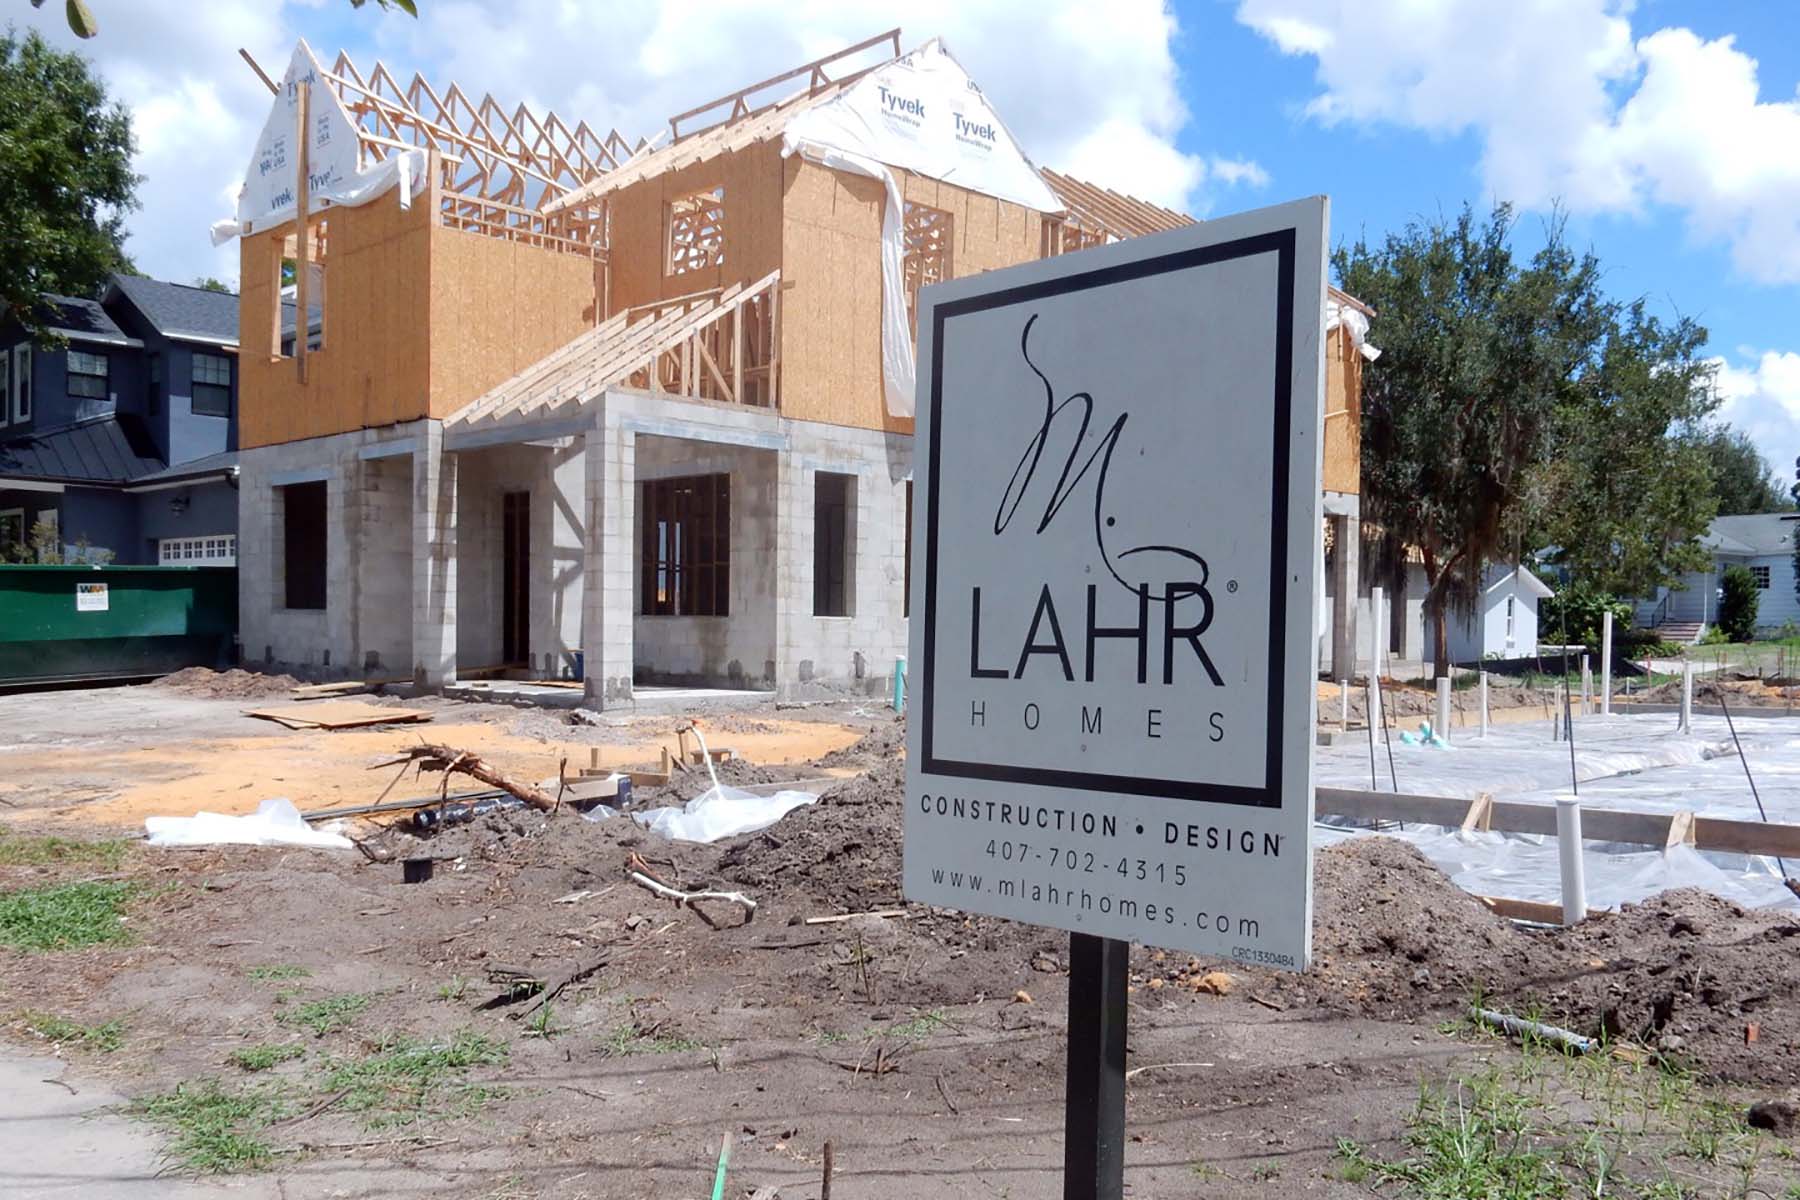 M-Lahr-Homes-Site-Signage